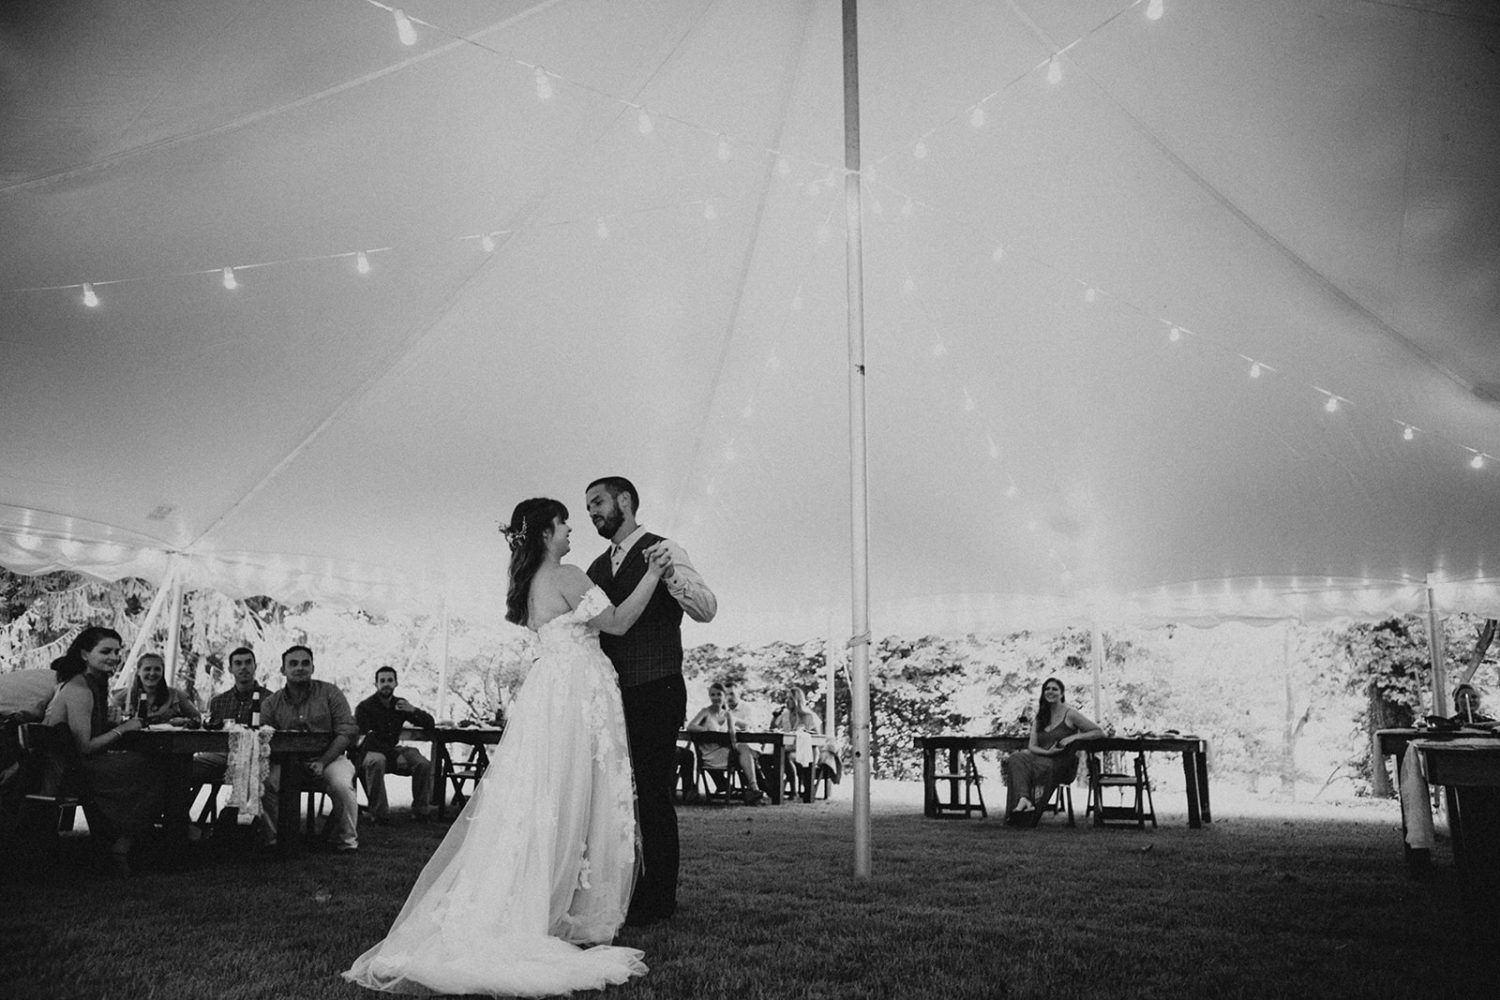 Couple dances under tent at backyard wedding